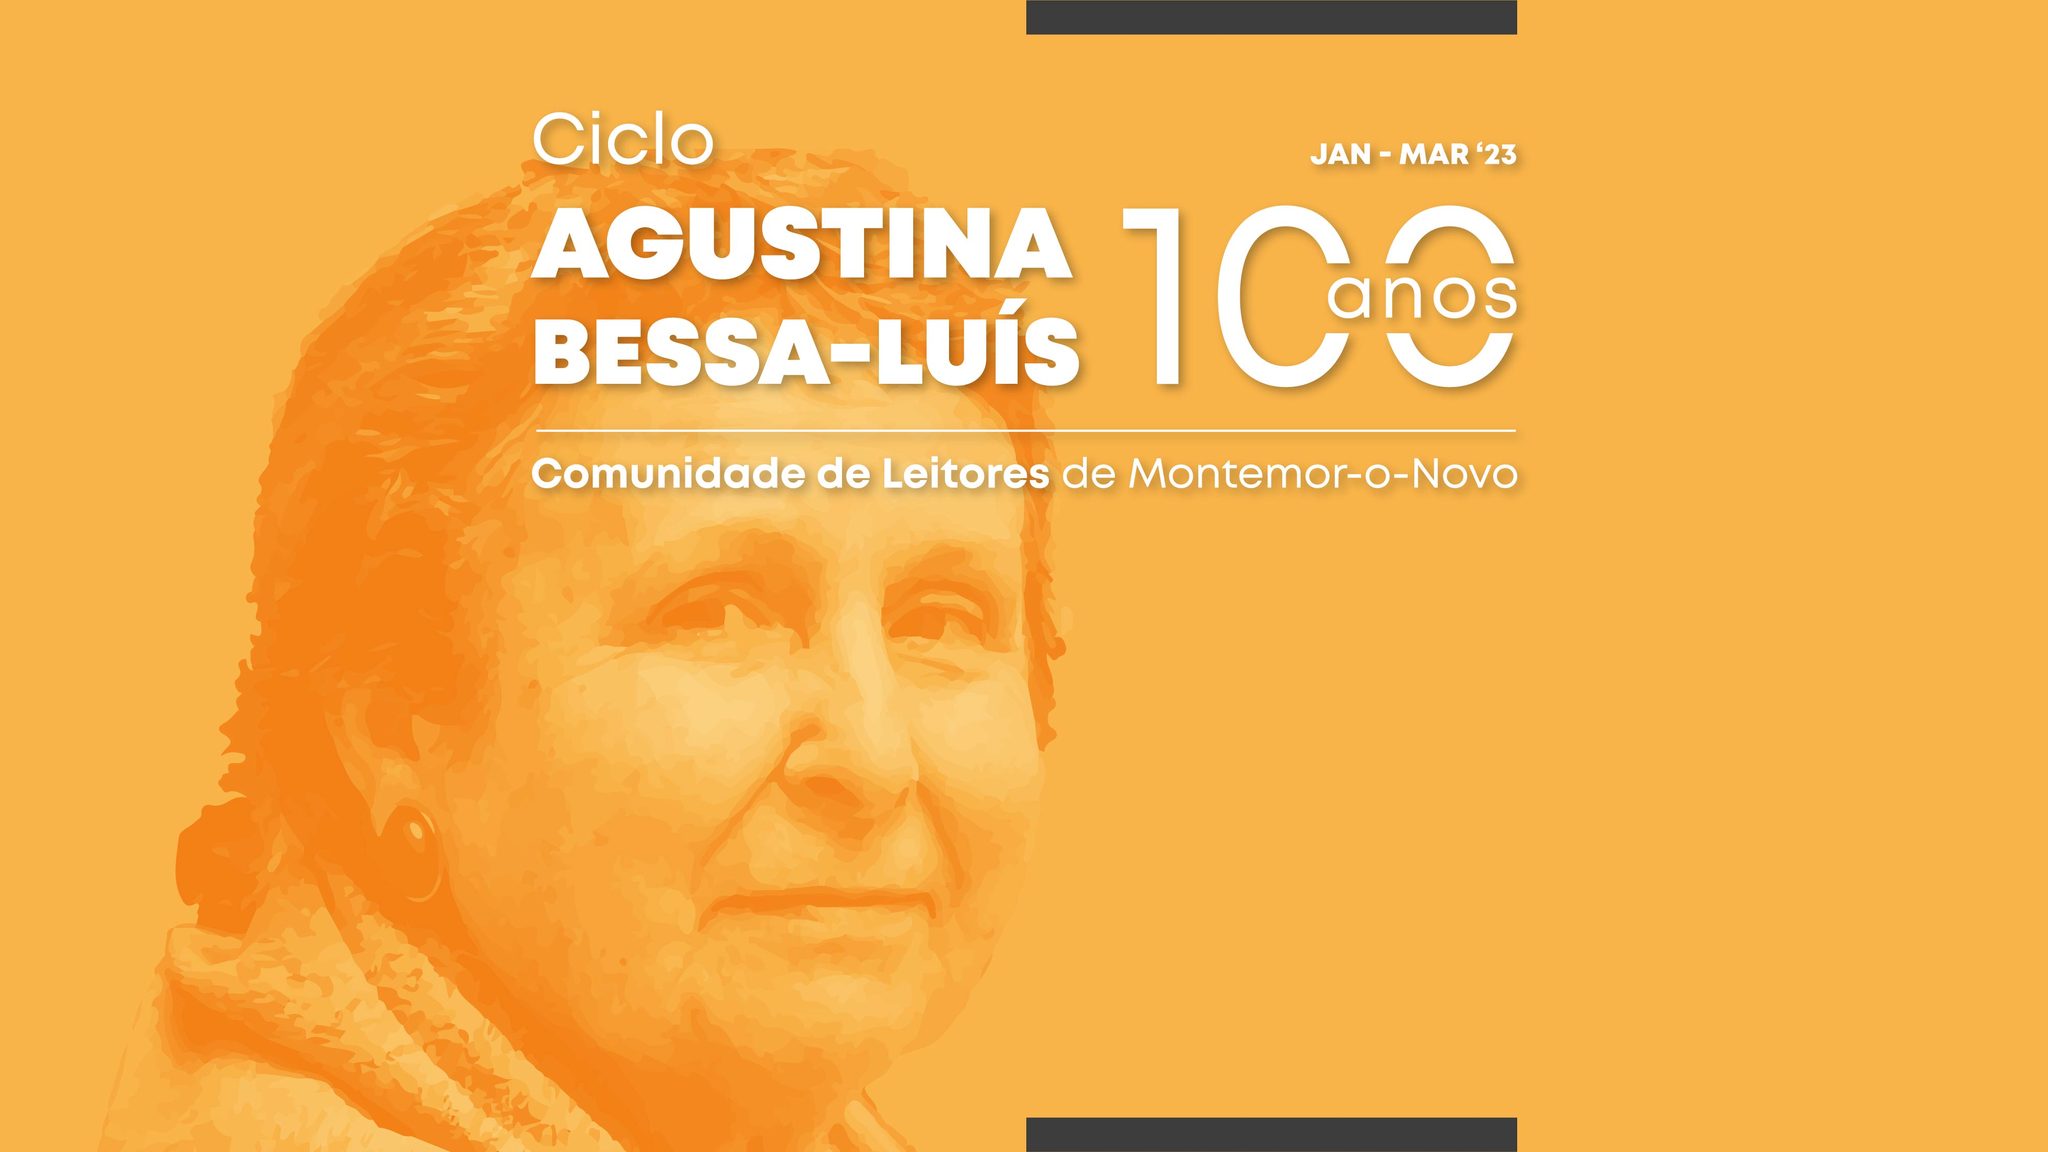 CICLO AGUSTINA BESSA-LUÍS - 100 ANOS: Comunidade de Leitores de Montemor-o-Novo